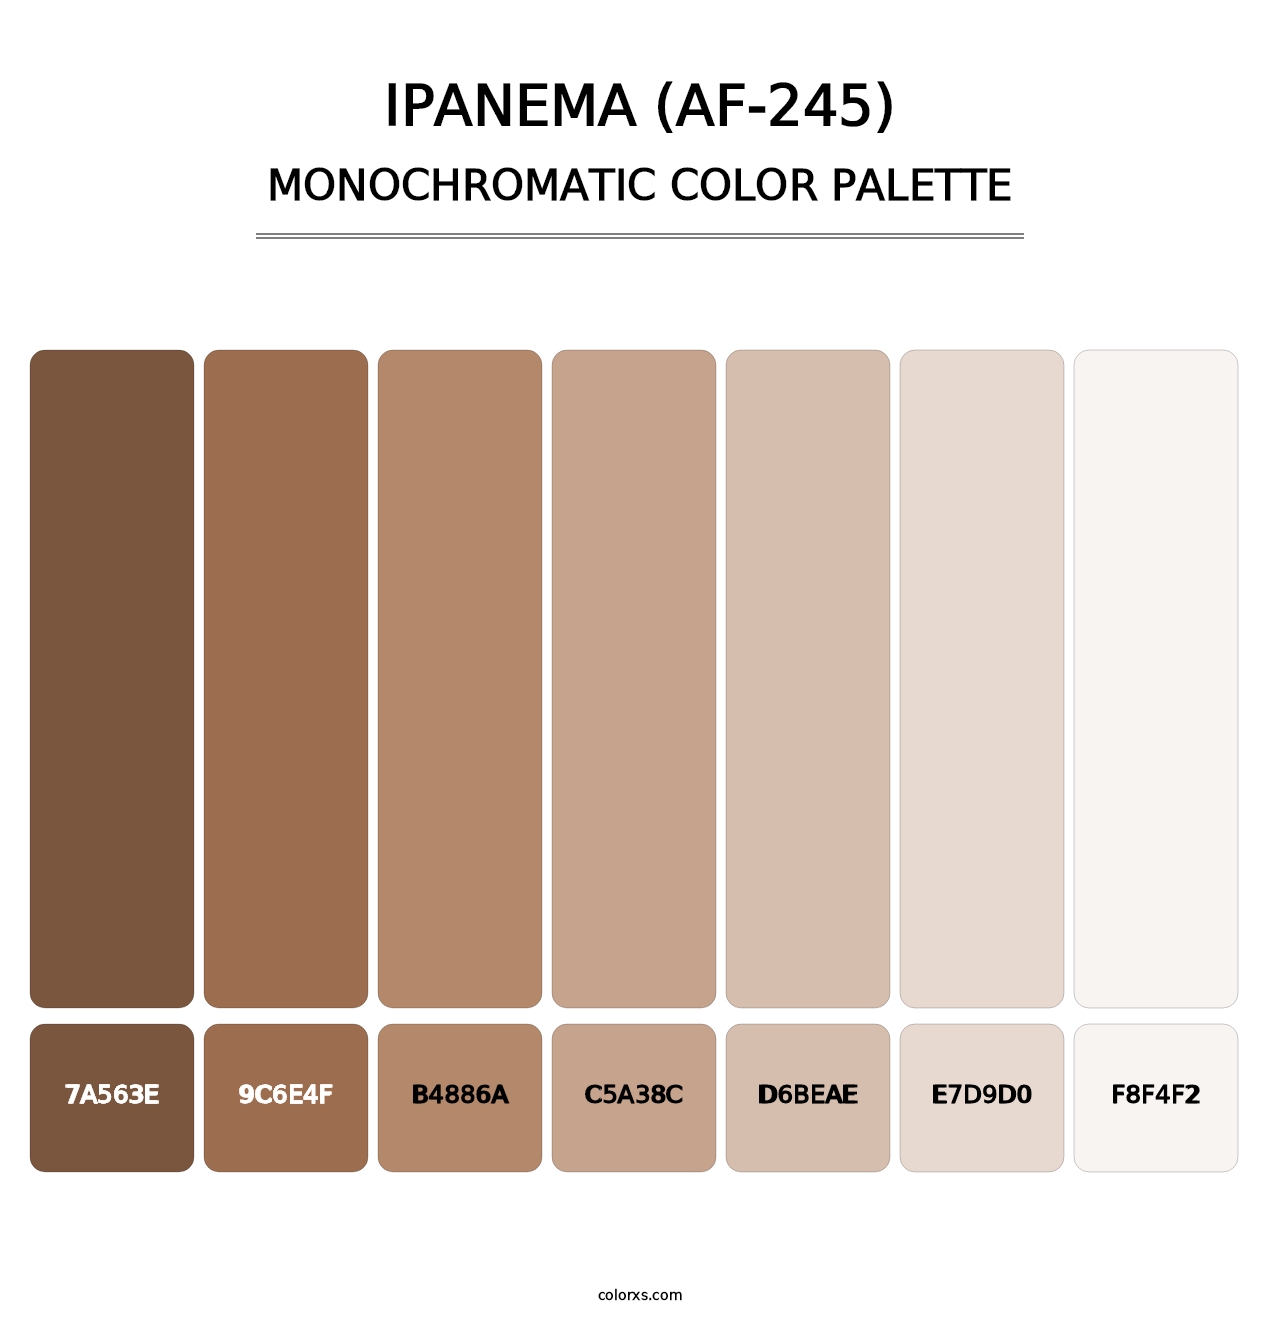 Ipanema (AF-245) - Monochromatic Color Palette